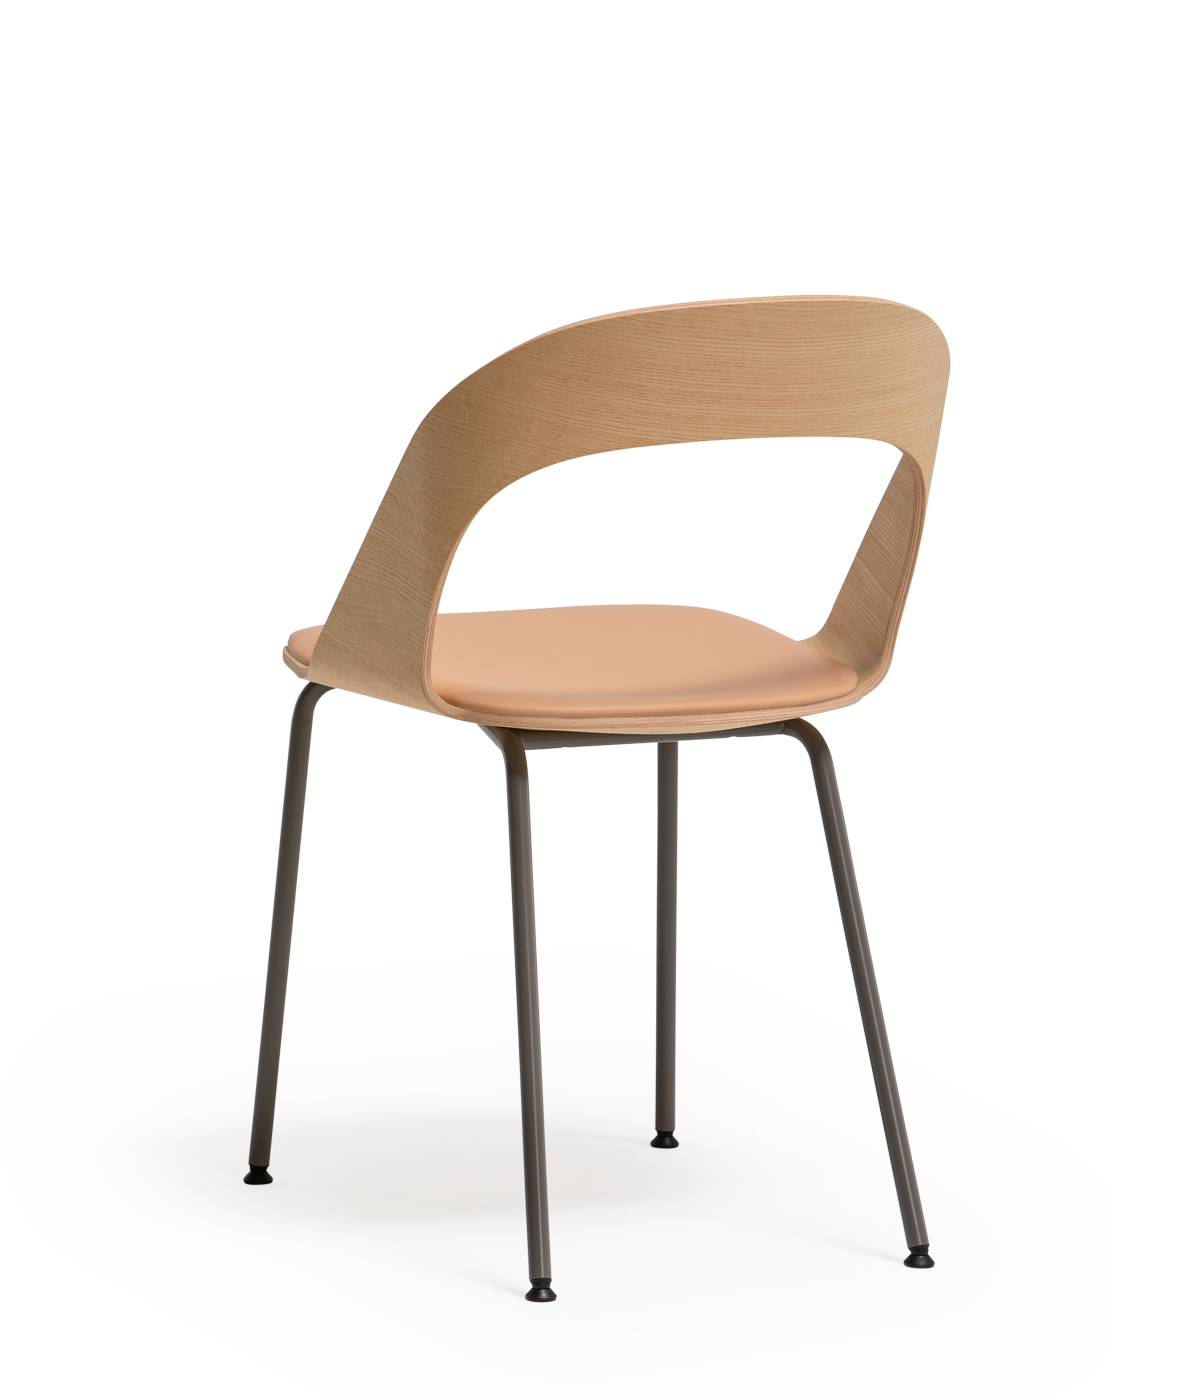 Vergés - Goose chair Model D with metallic legs